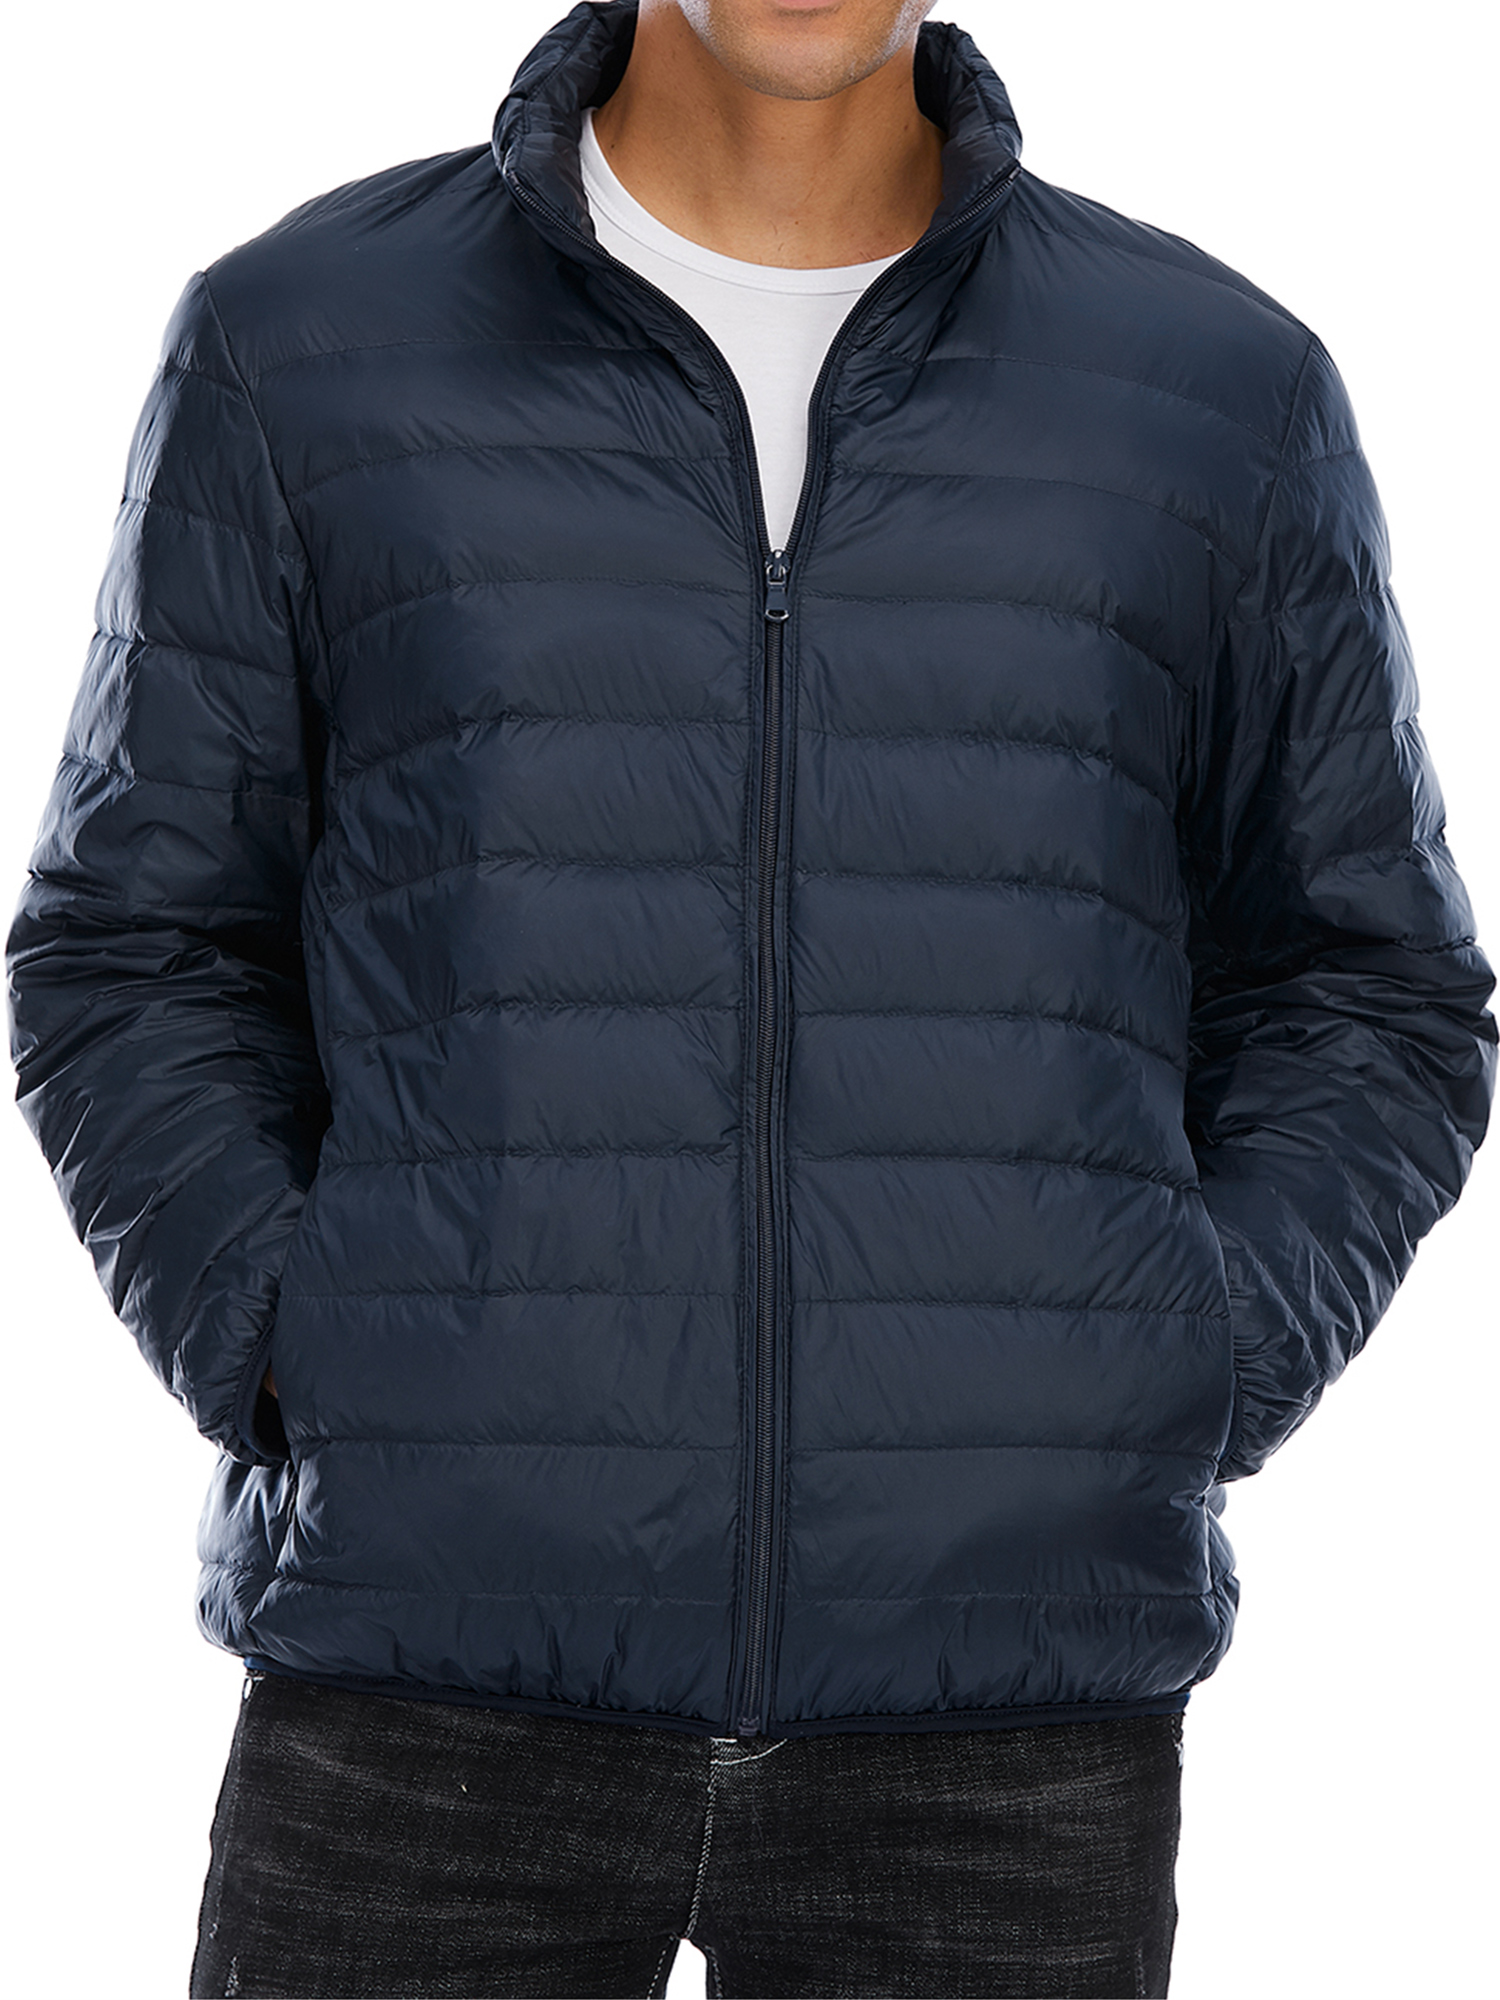 FOCUSSEXY Mens Down Puffer Jacket Lightweight Packable Winter Coat Men's Down Puffer Jacket Warm Casual Outdoor Zipper Jacket Packable Puffer Jacket, Blue - image 1 of 7